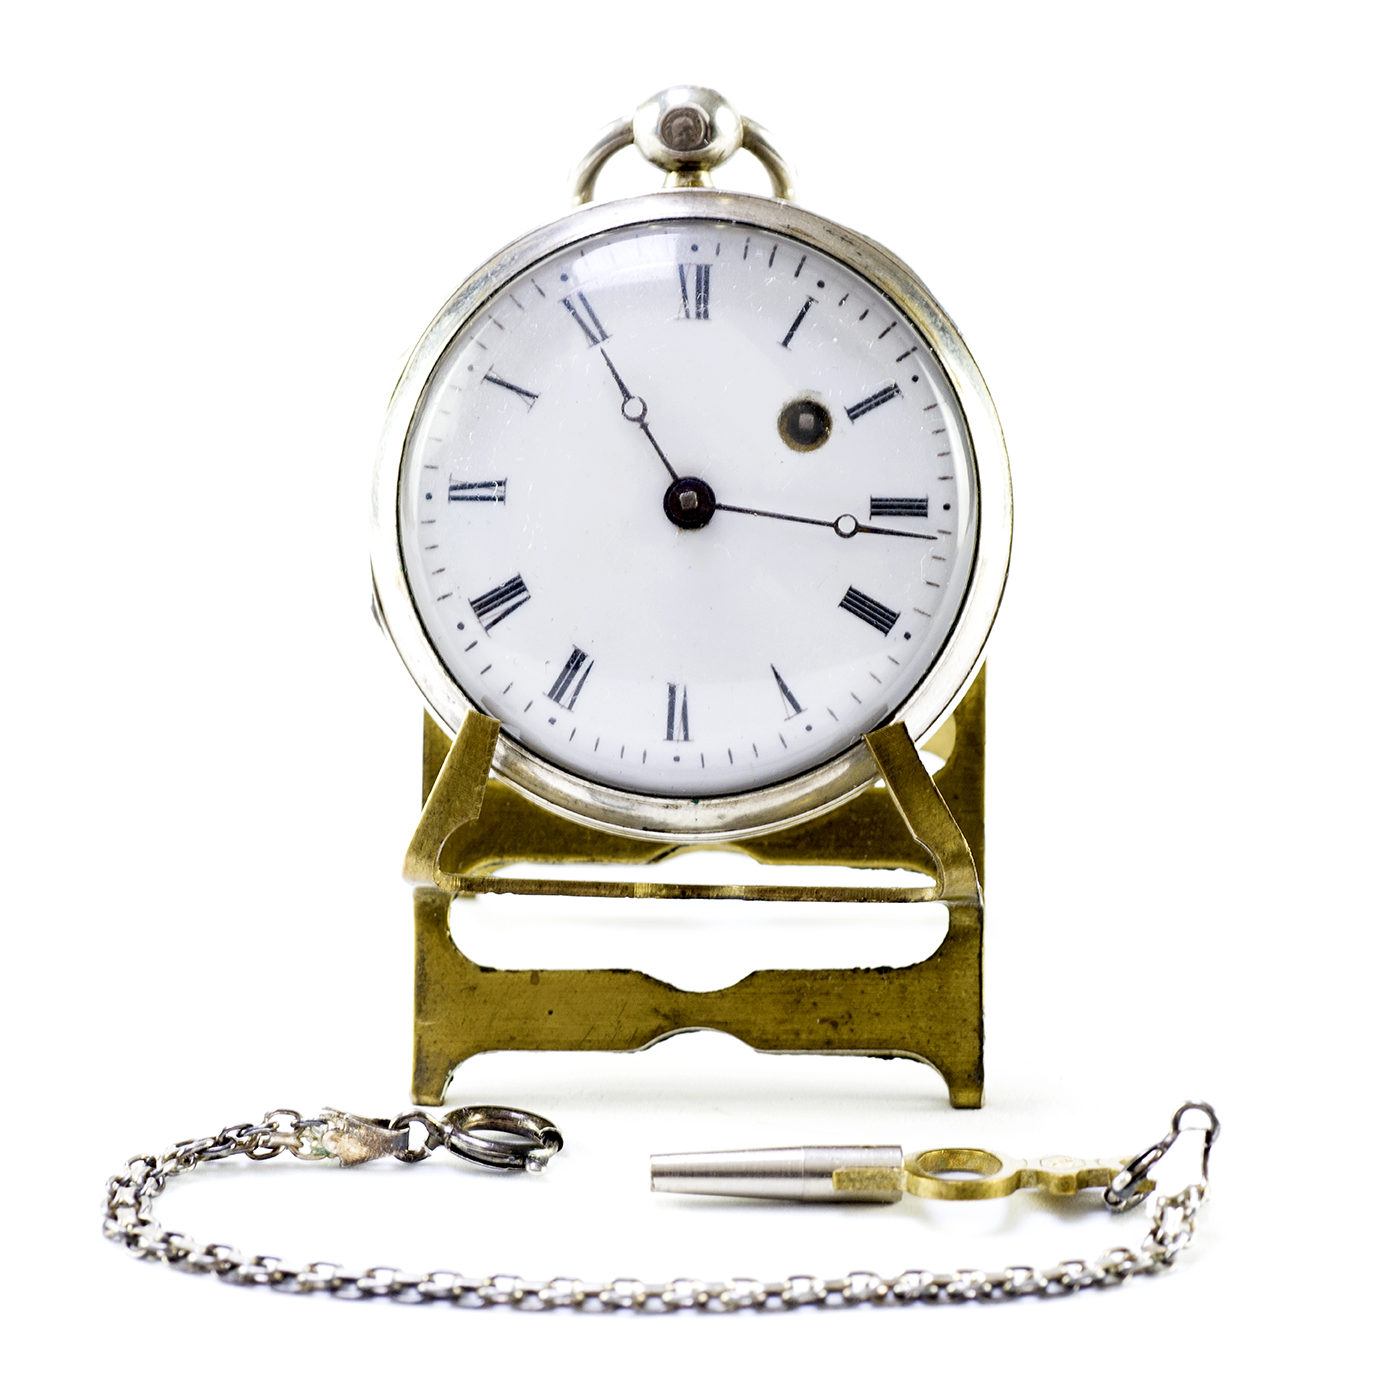 PIERRE & FILS (A Rouen). Reloj francés de Bolsillo-Colgar, lepine, Verge Fusee (Catalino). Ca. 1790.